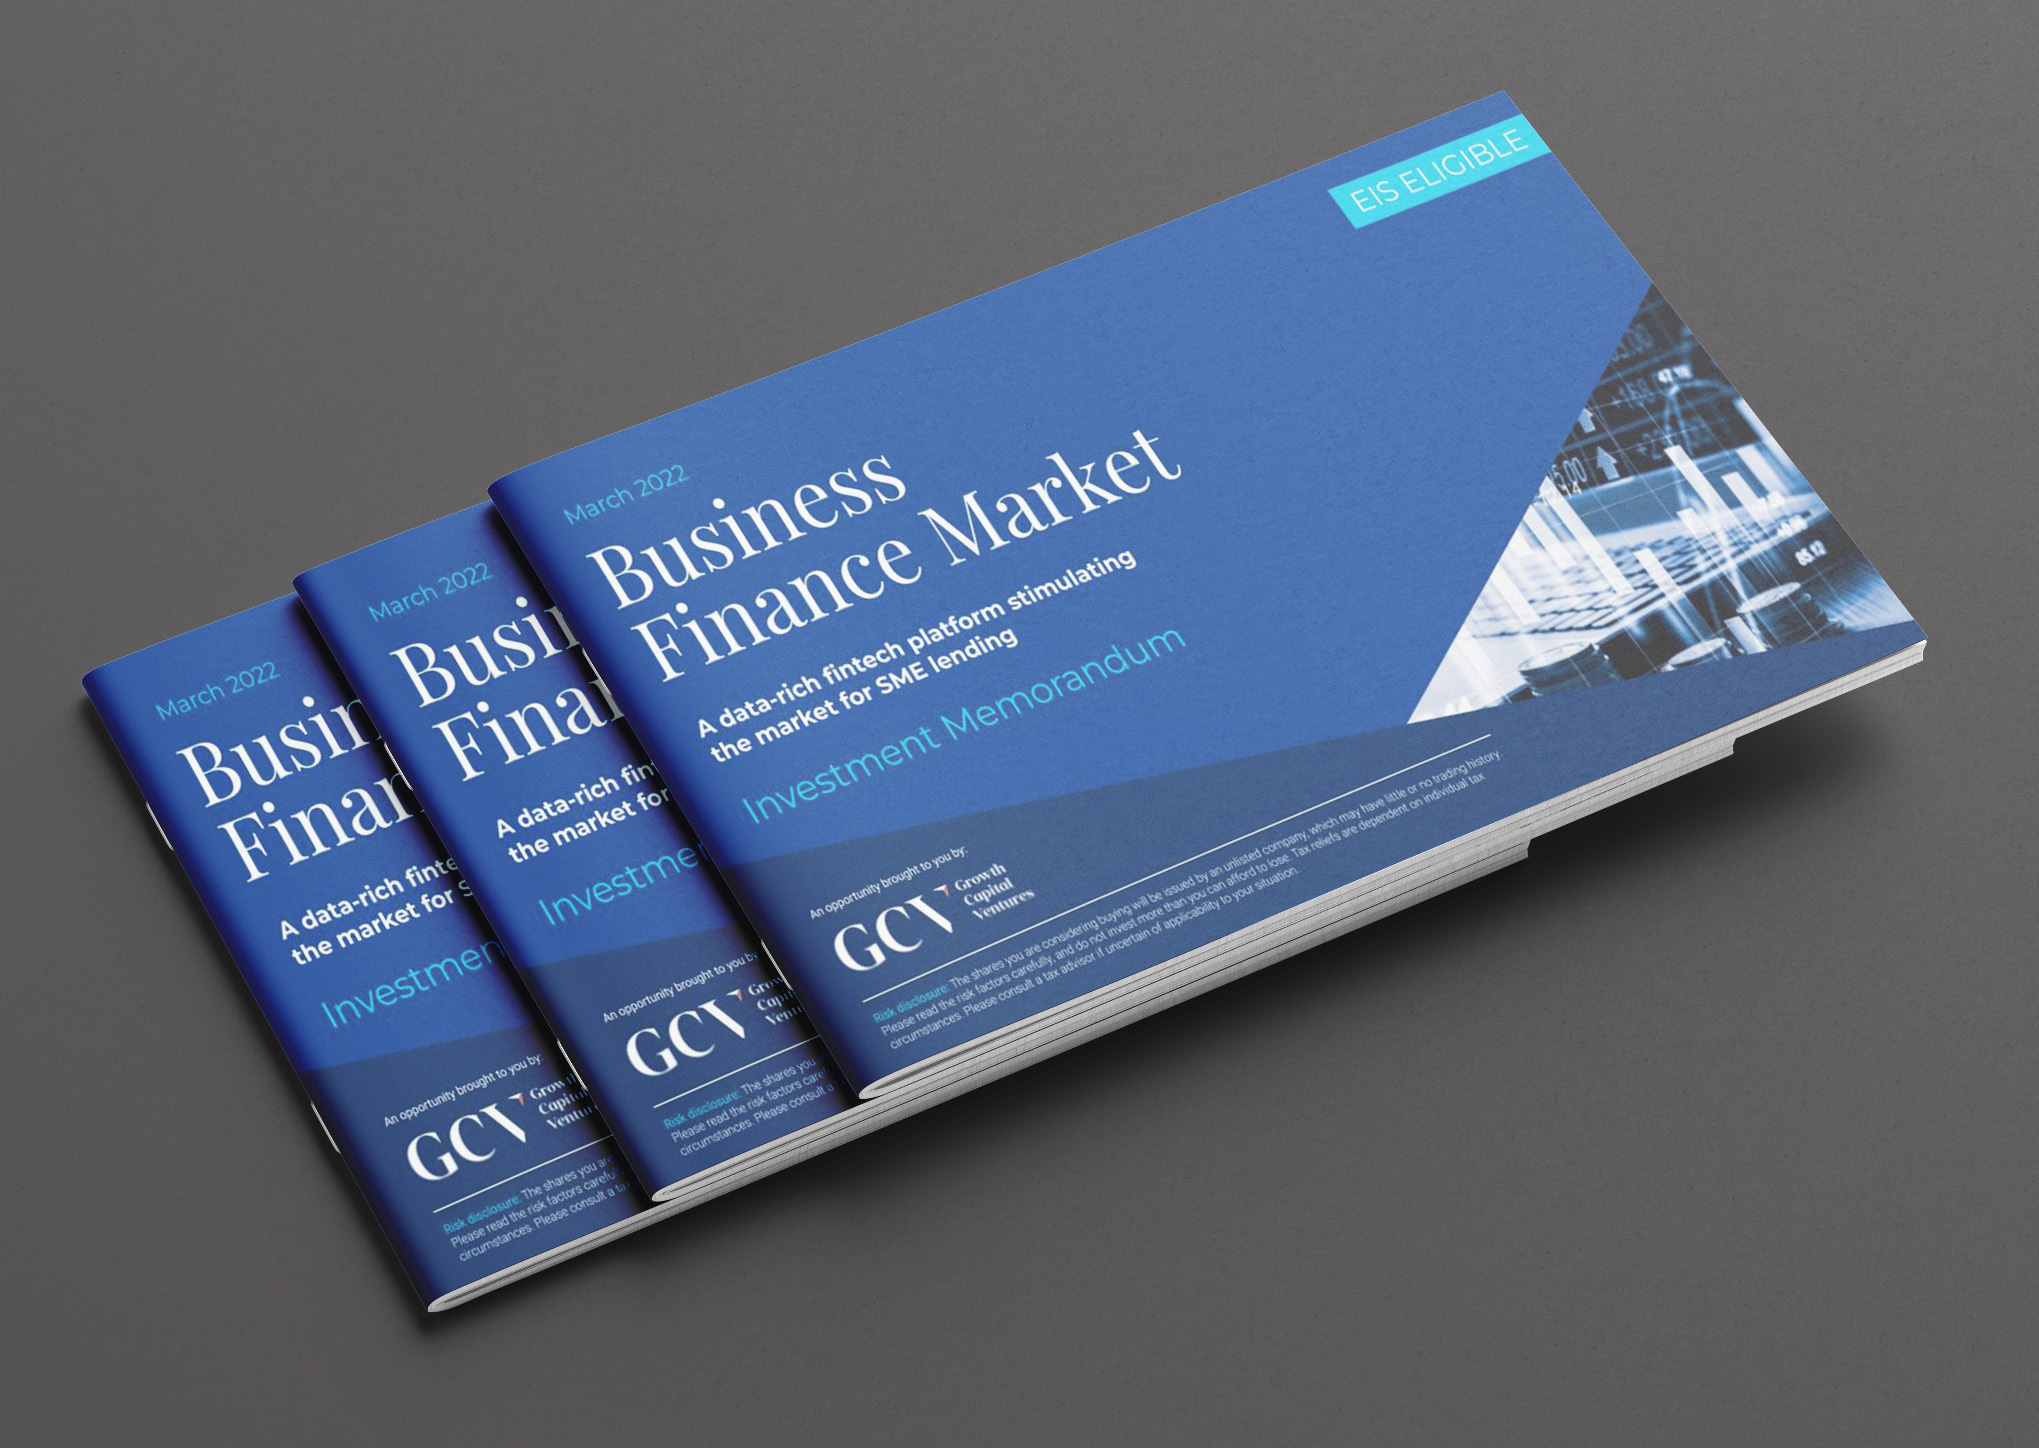 Business Finance Market - Investment Memorandum Cover Image